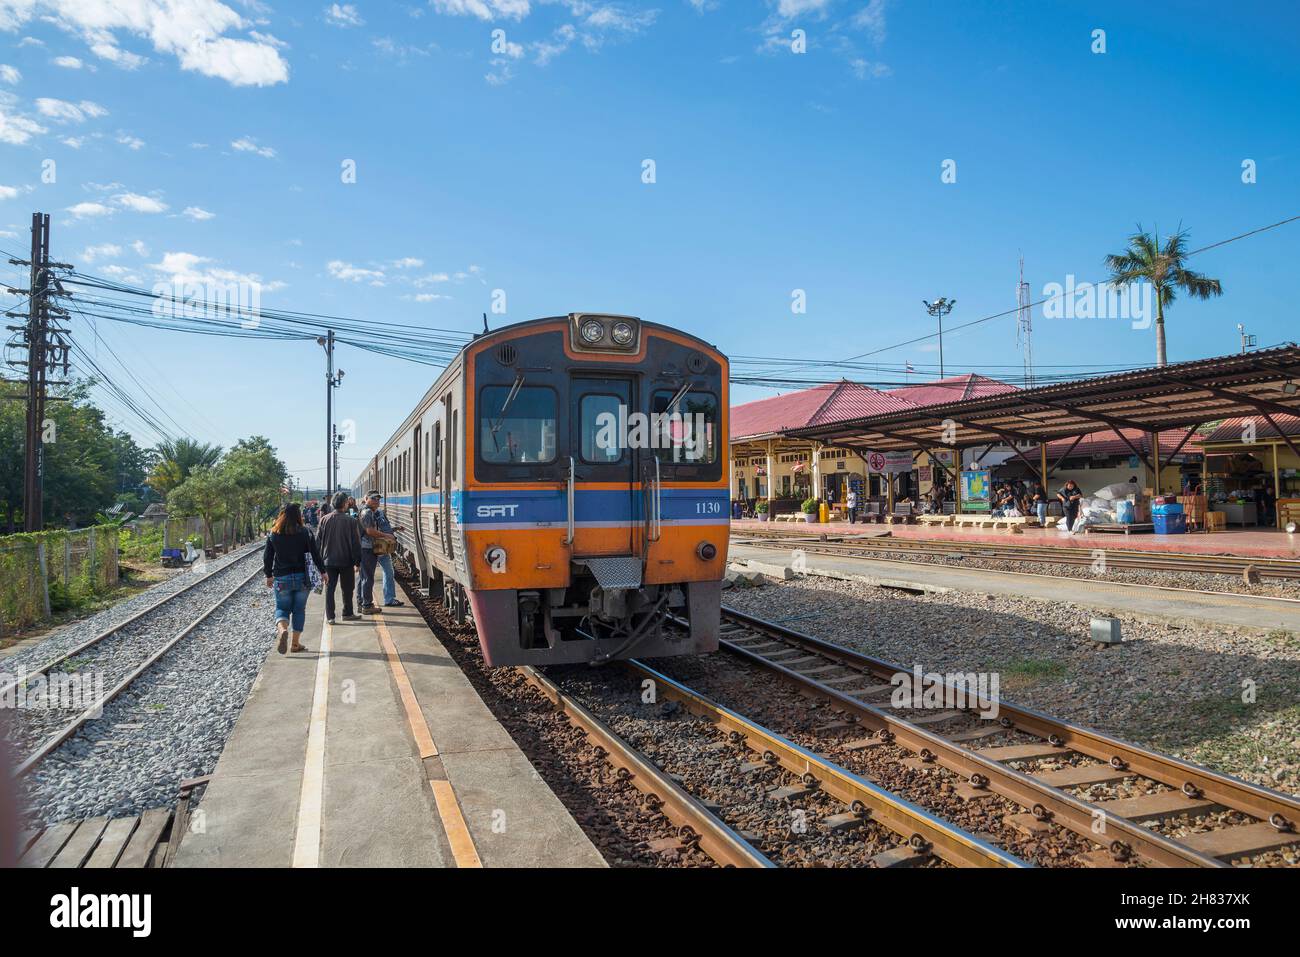 AYUTTHAYA, THAILAND - JAN 02, 2017: Passenger train at the platform of Ayutthaya railway station on a sunny day Stock Photo